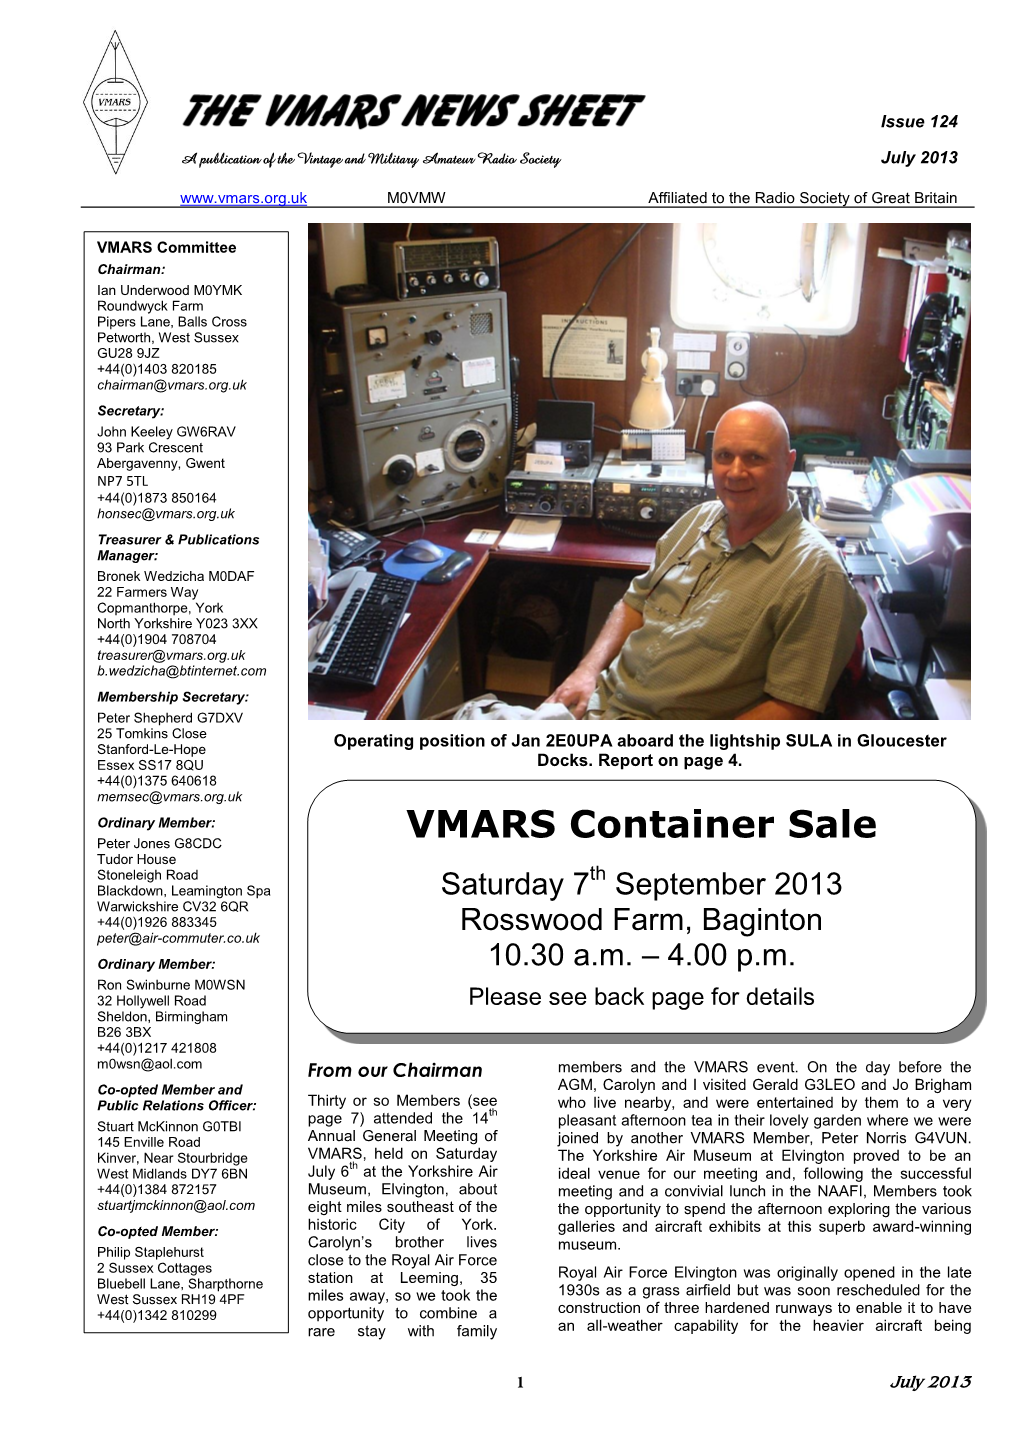 VMARS Container Sale